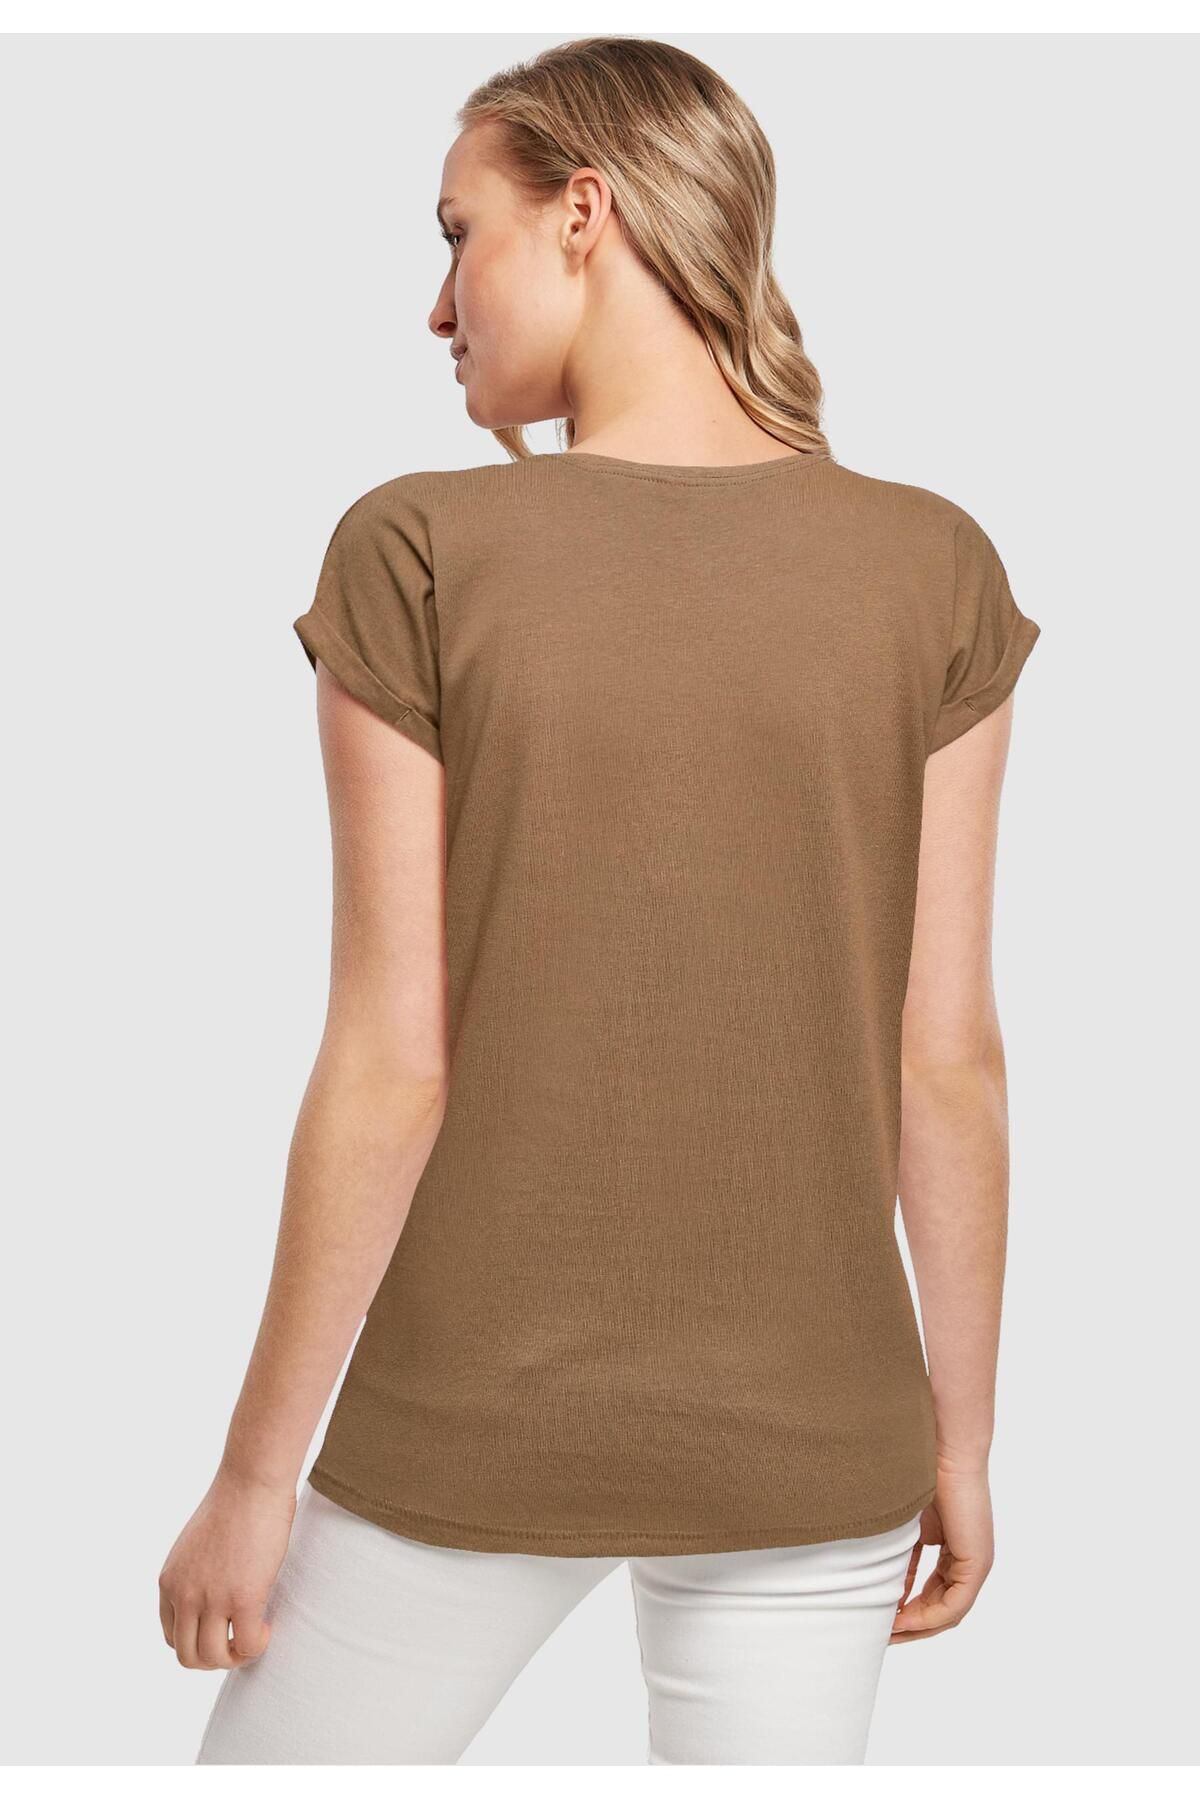 Merchcode Damen Ladies Layla - Limited Edition X T-Shirt - Trendyol | T-Shirts